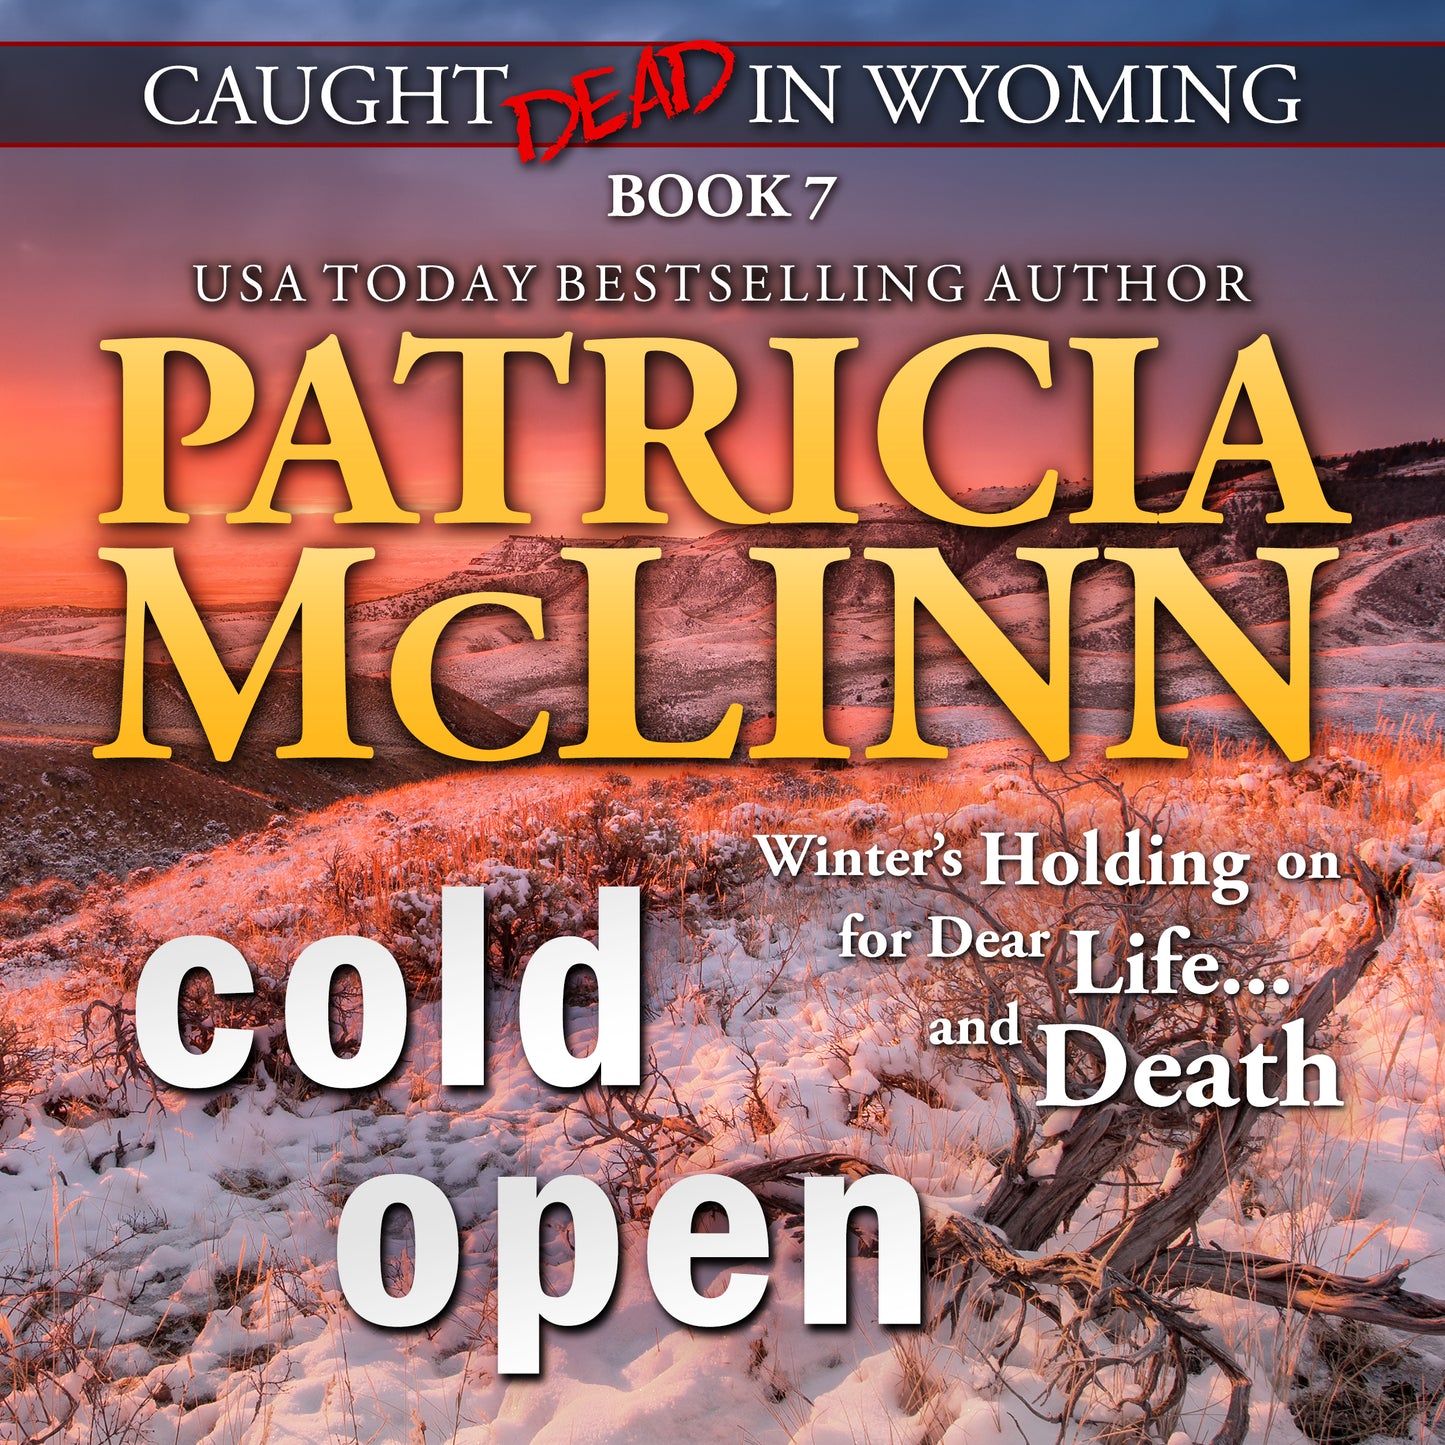 Cold Open Audiobook - Patricia McLinn